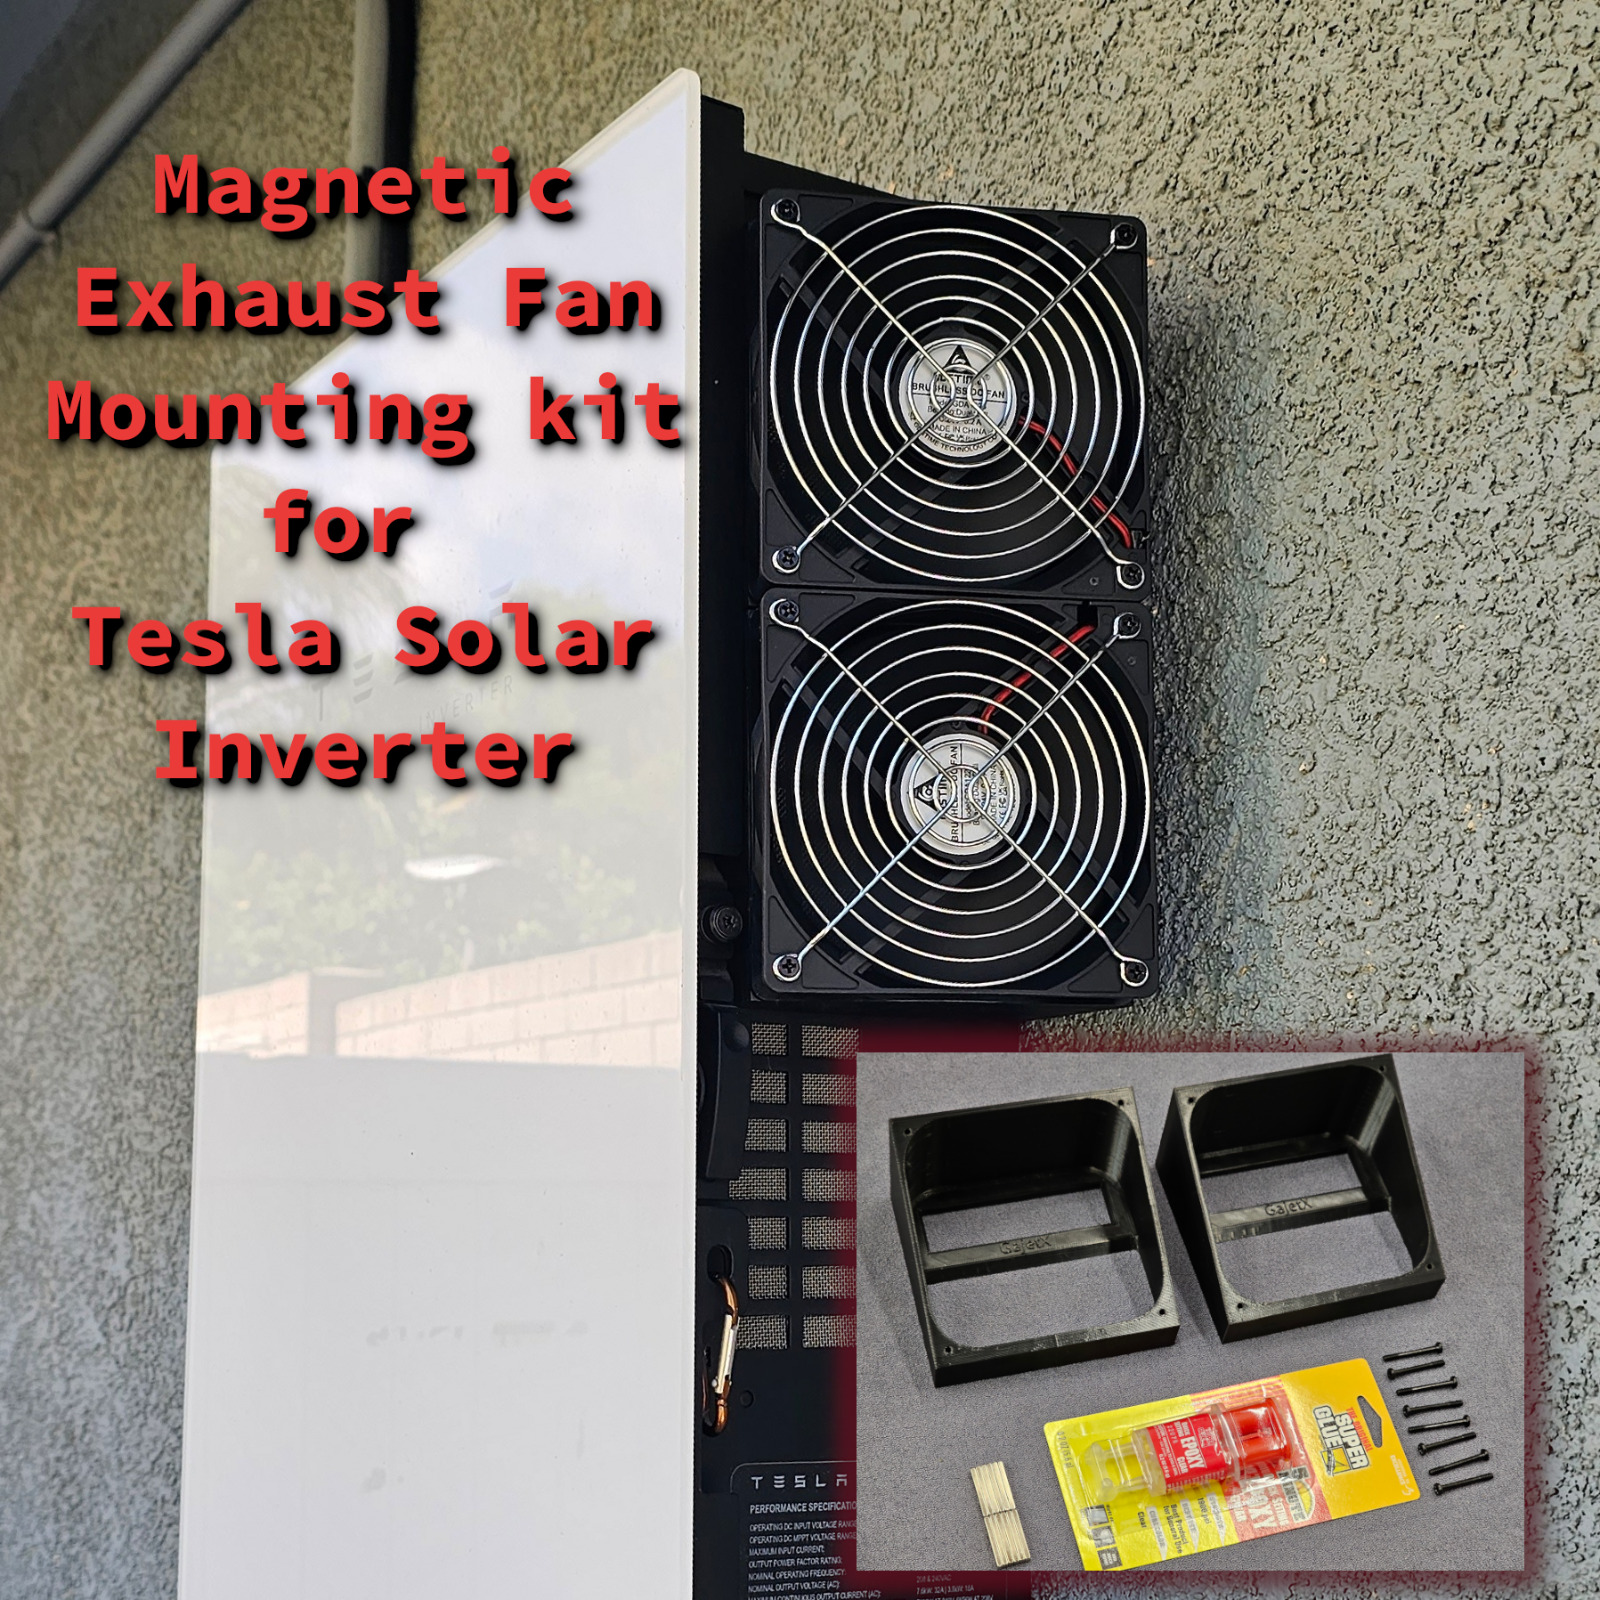 Tesla Solar Inverter Magnetic exhaust fan mounting adapter kit - 2 pack